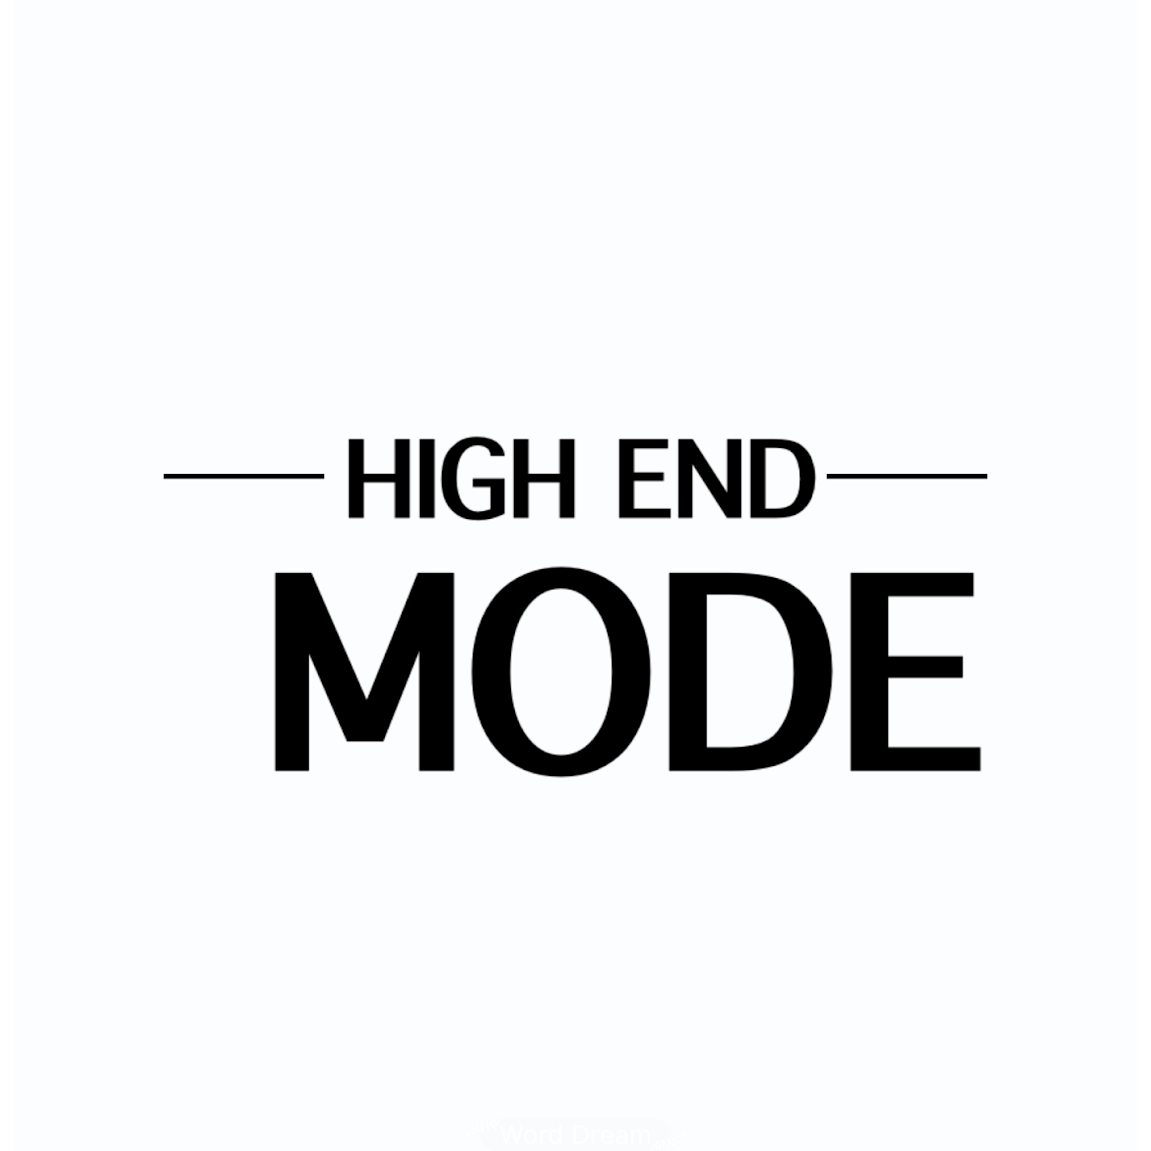 High End Mode